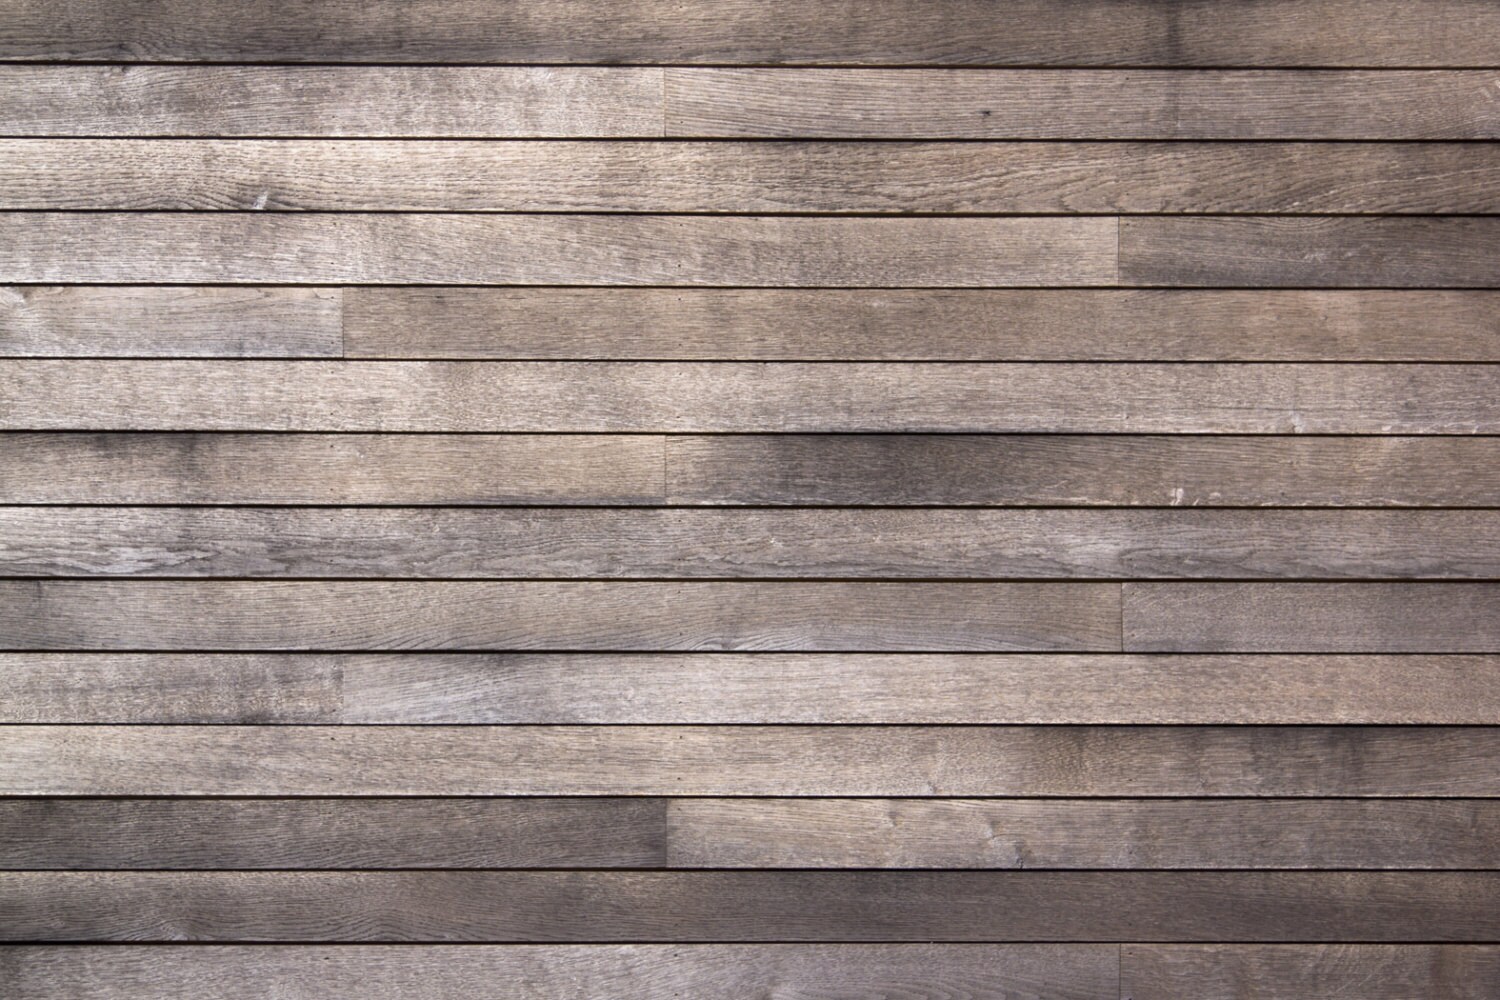 Weathered Wood Backdrop - old brown-grey planks floor ...